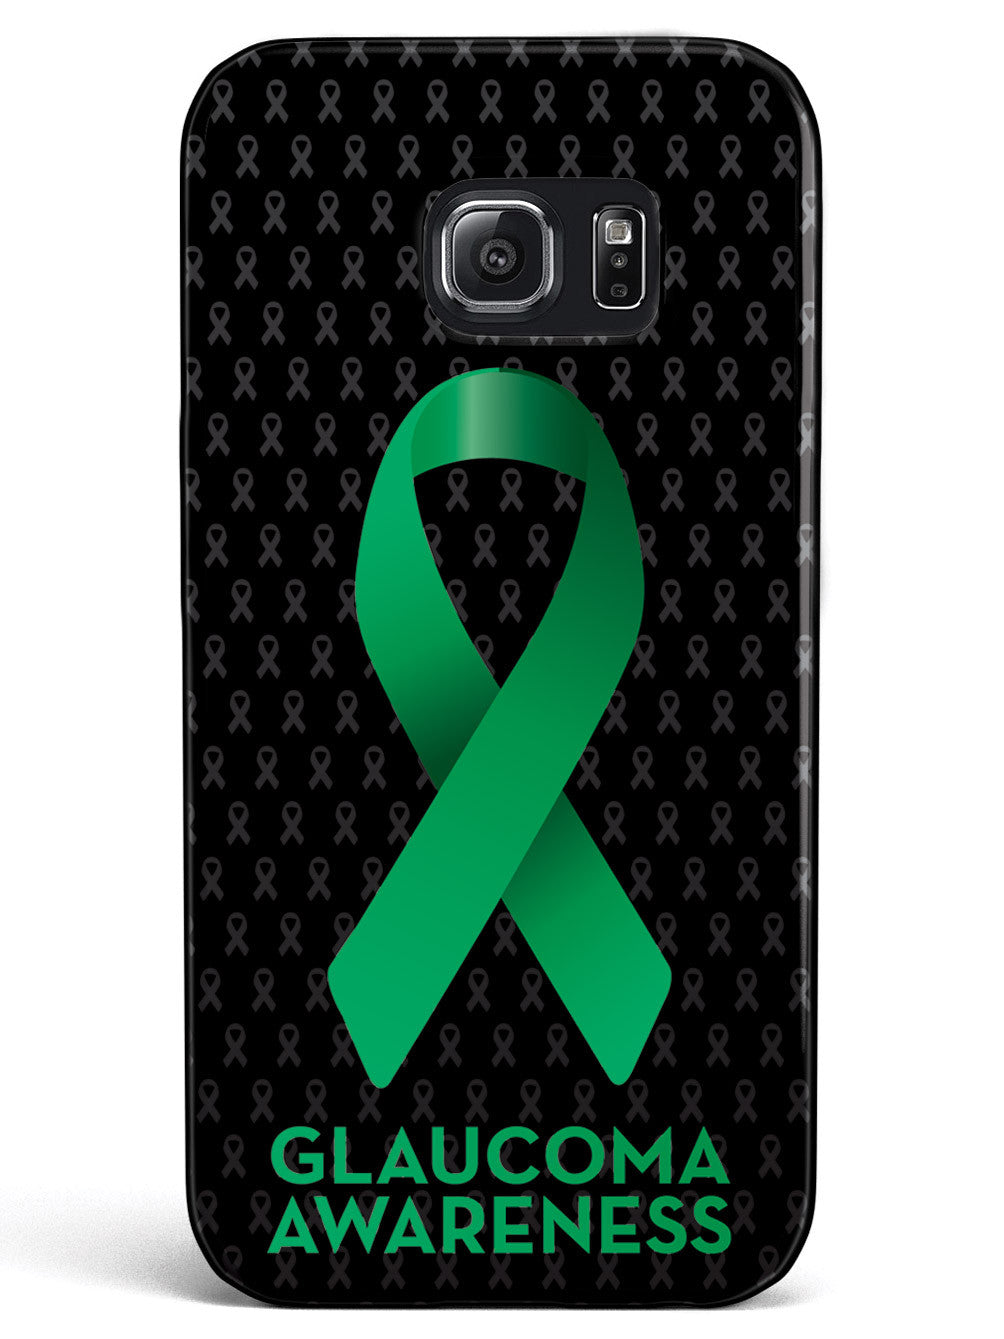 Glaucoma Awareness Green Ribbon - Black Case